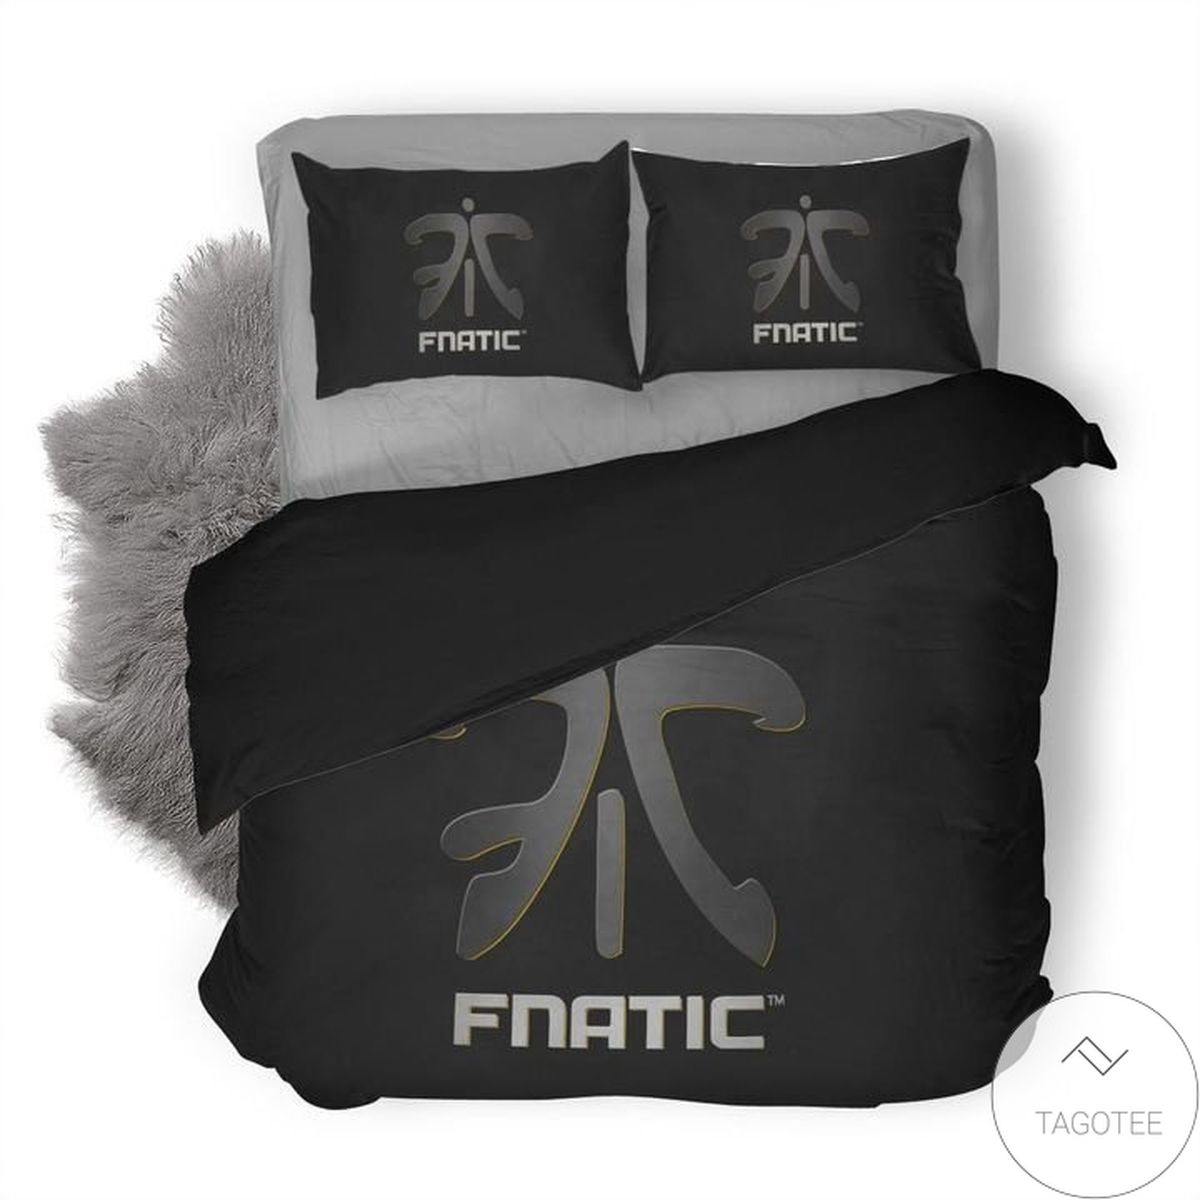 Fnatic Bedding Set